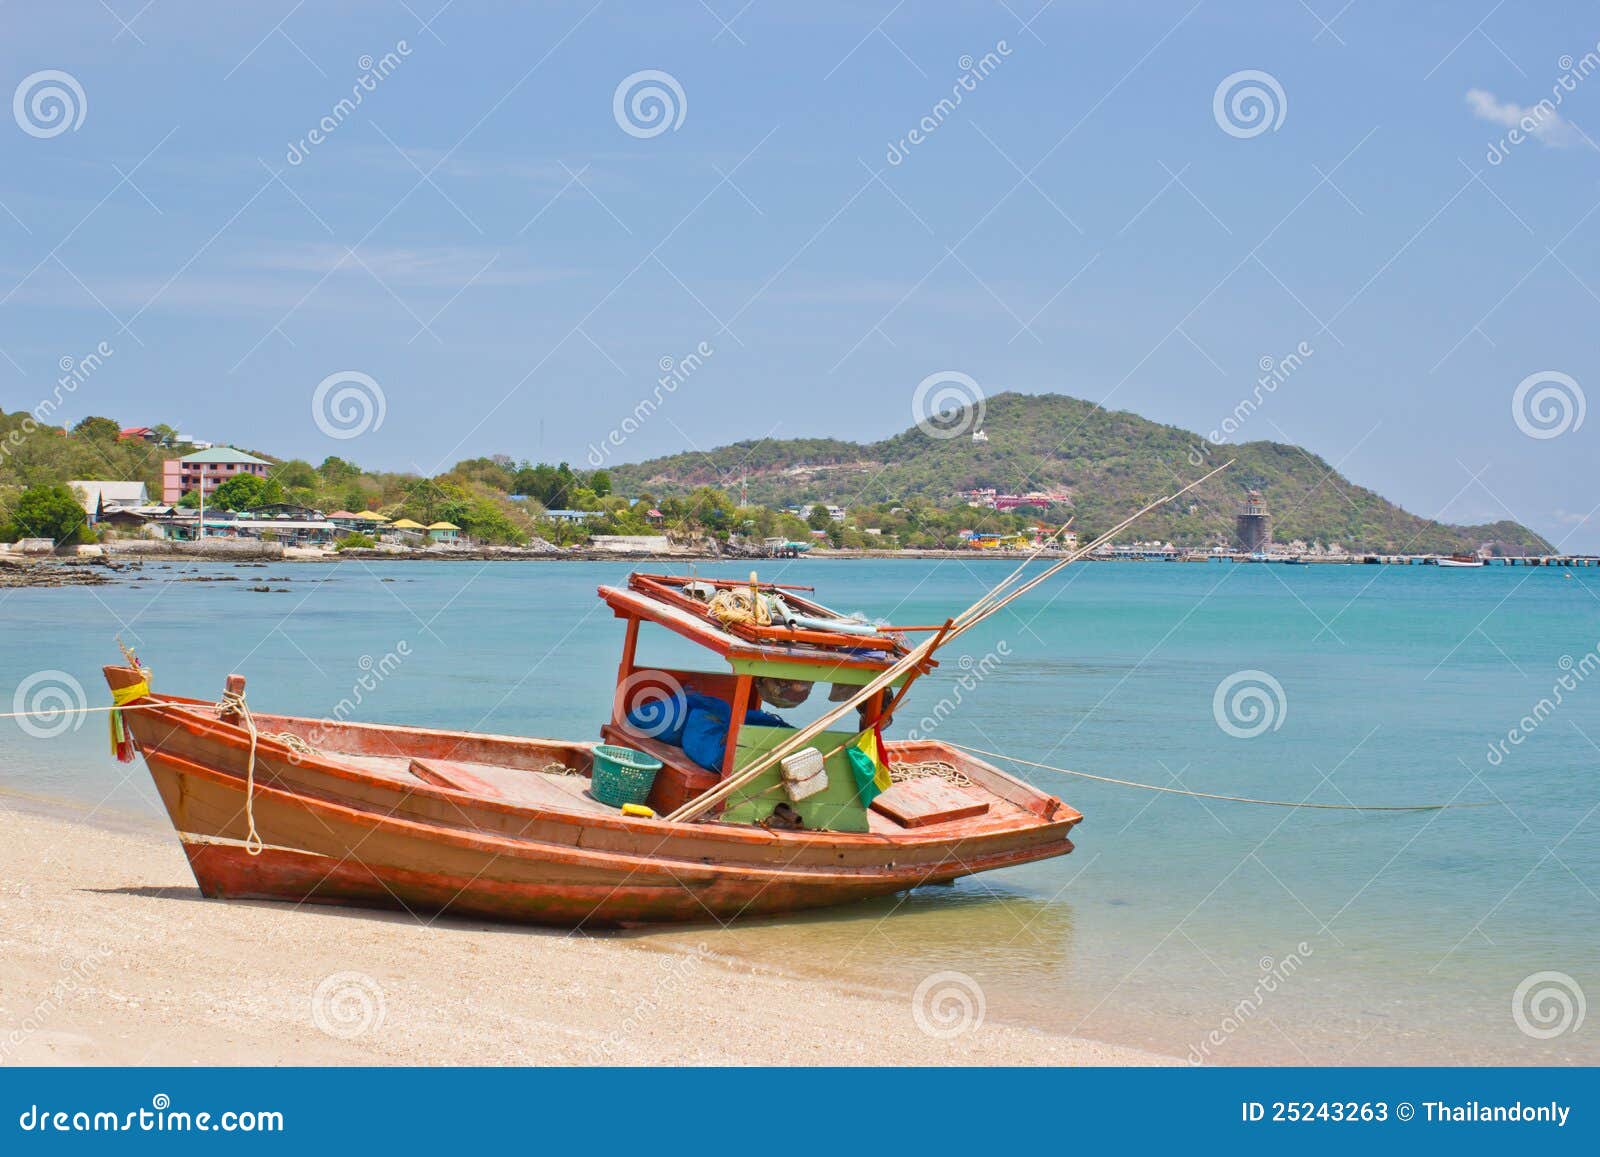 Boat In Thai Beach Stock Photos - Image: 25243263